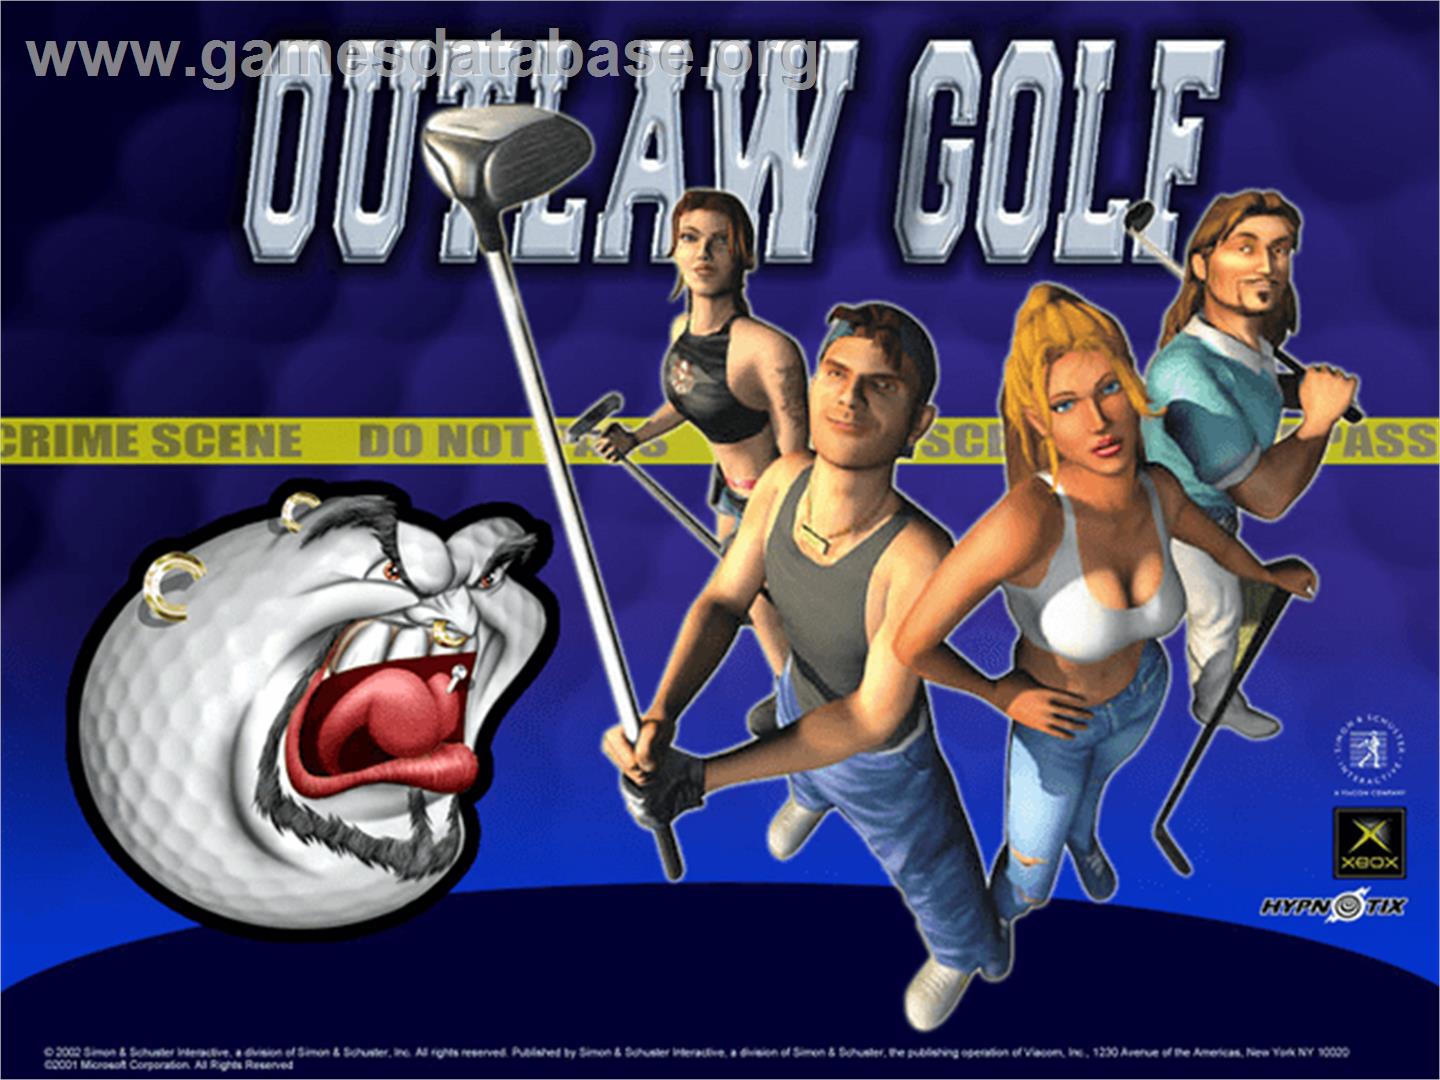 Outlaw Golf: 9 More Holes of X-Mas - Microsoft Xbox - Artwork - Title Screen